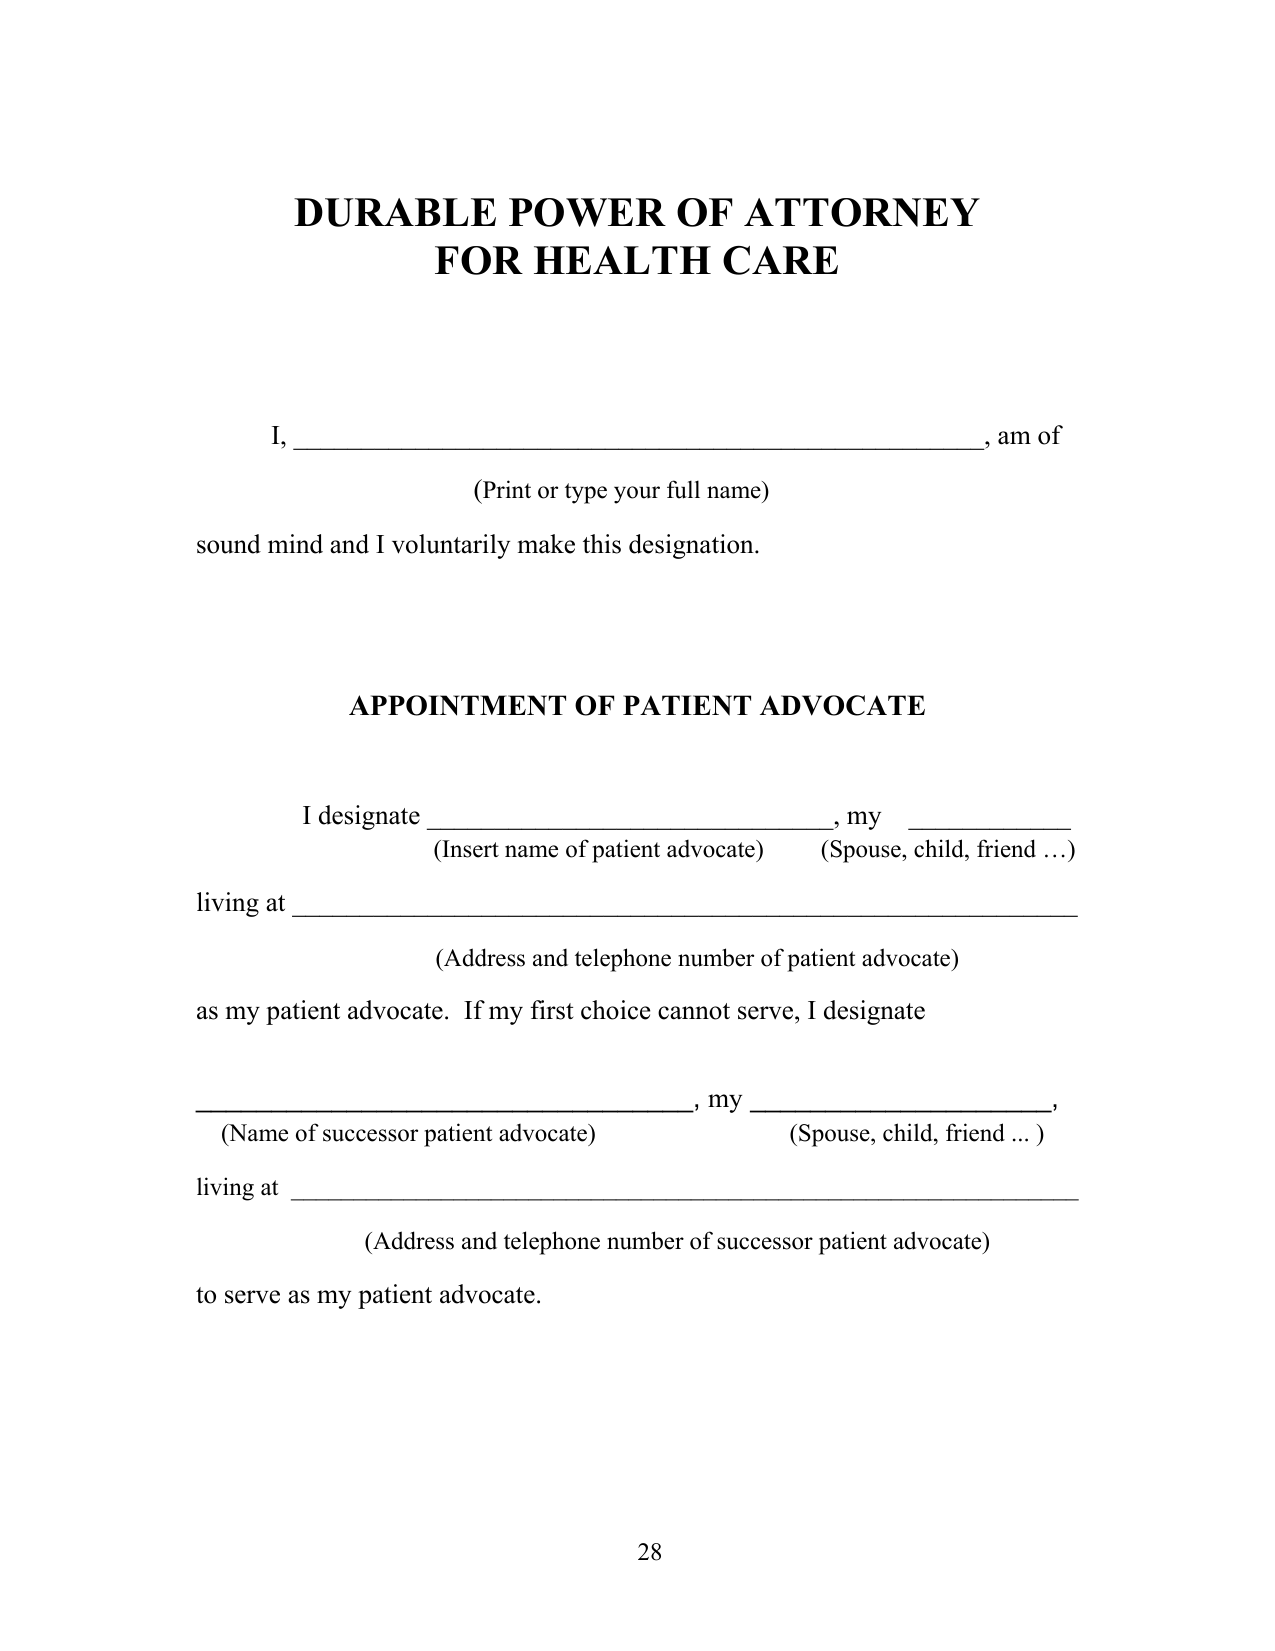 download-michigan-living-will-form-advance-directive-pdf